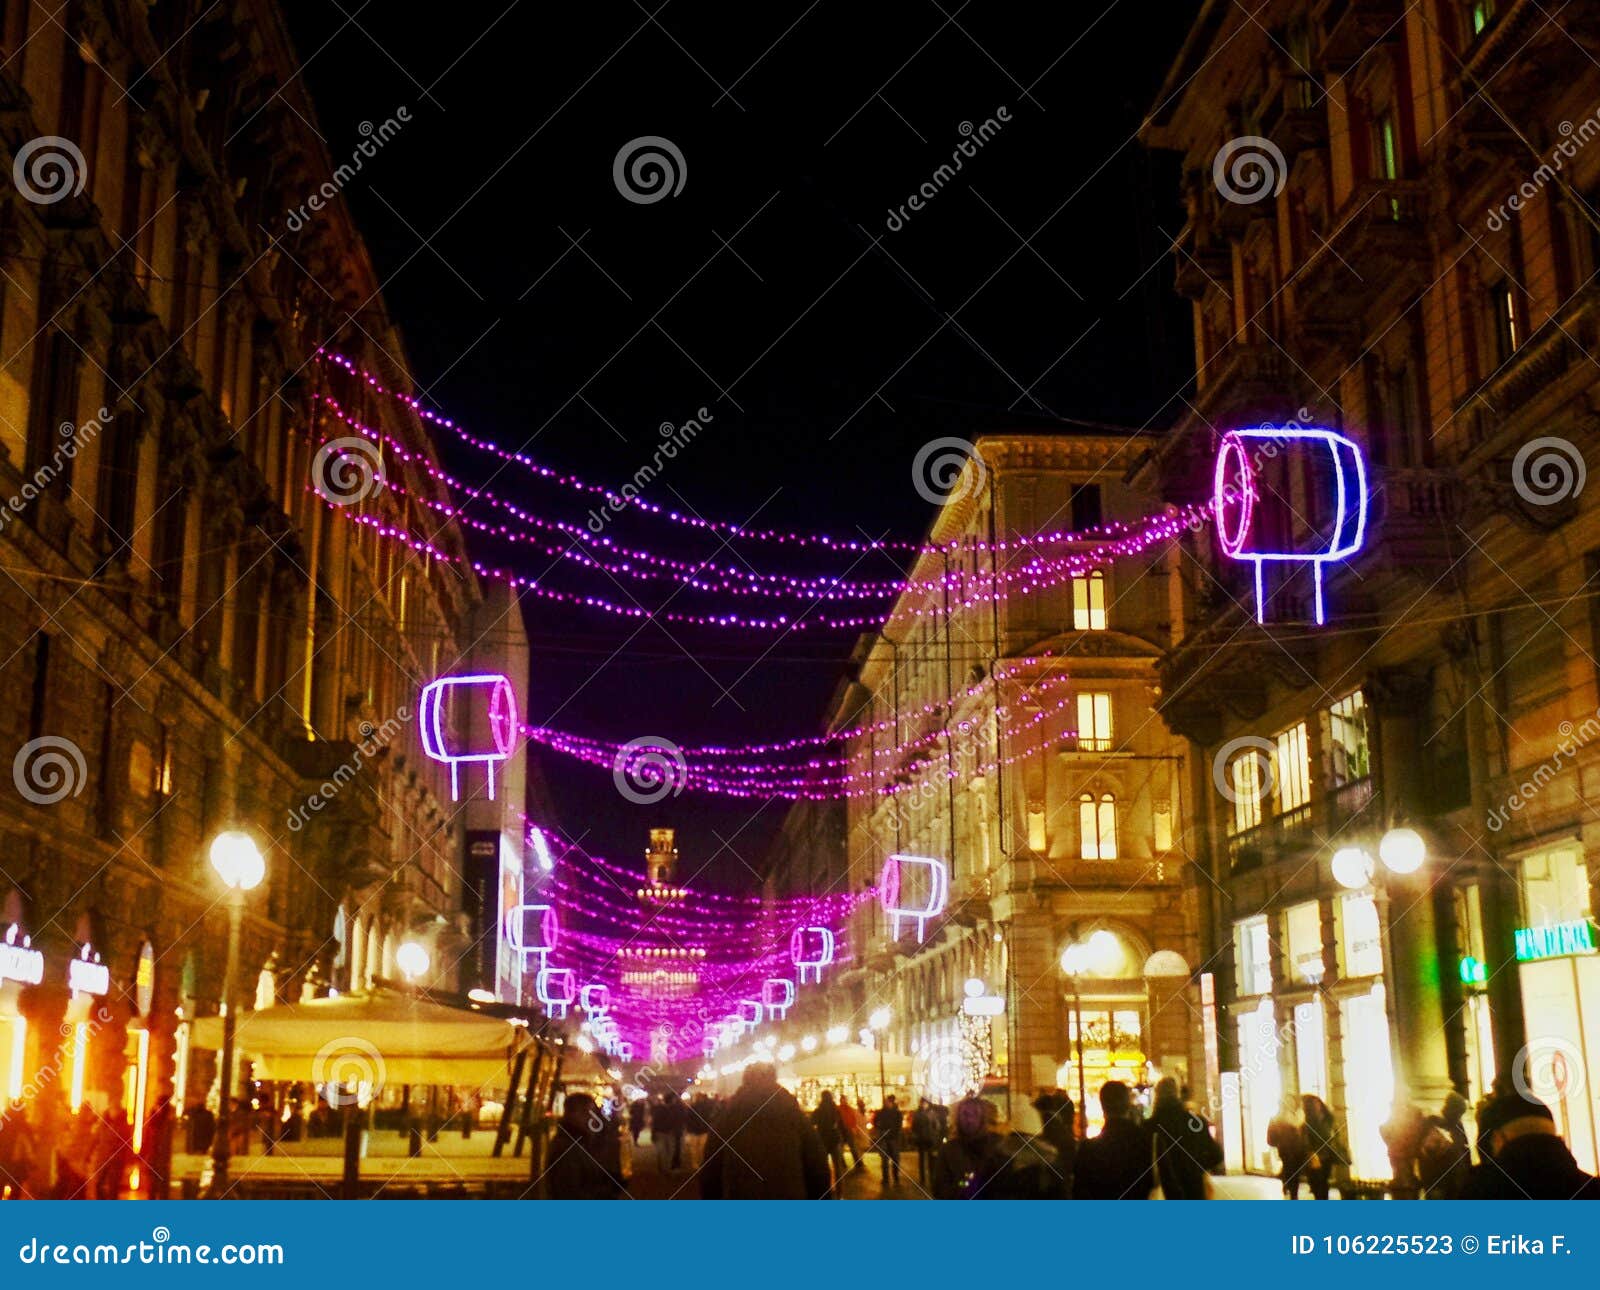 Christmas lights stock image. Image of city, night, architecture ...